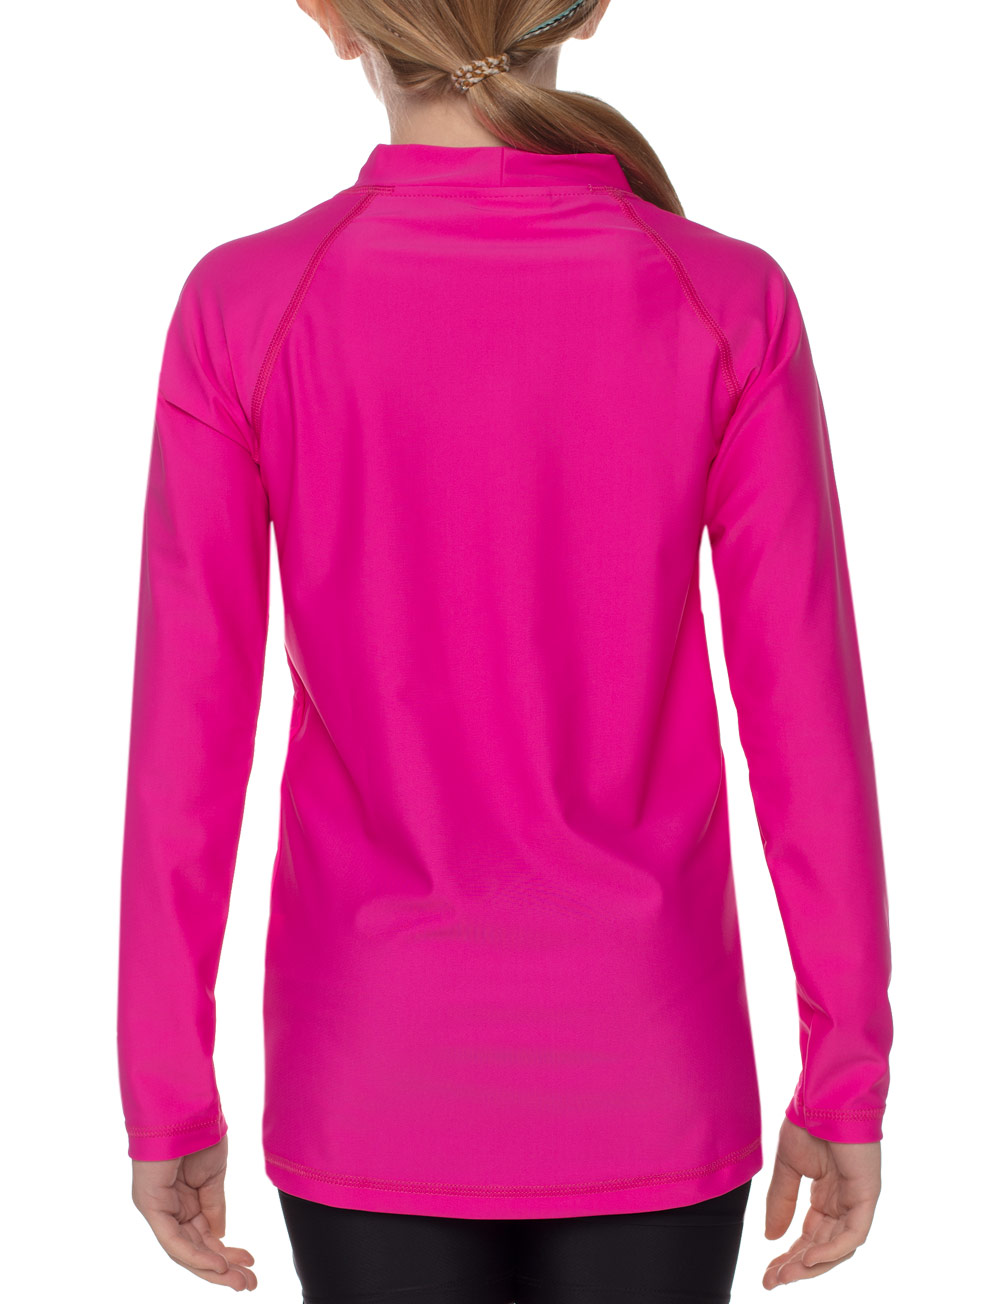 UV LSF 50+ langarm Shirt für Kinder Econyl aus recyceltem Material pink